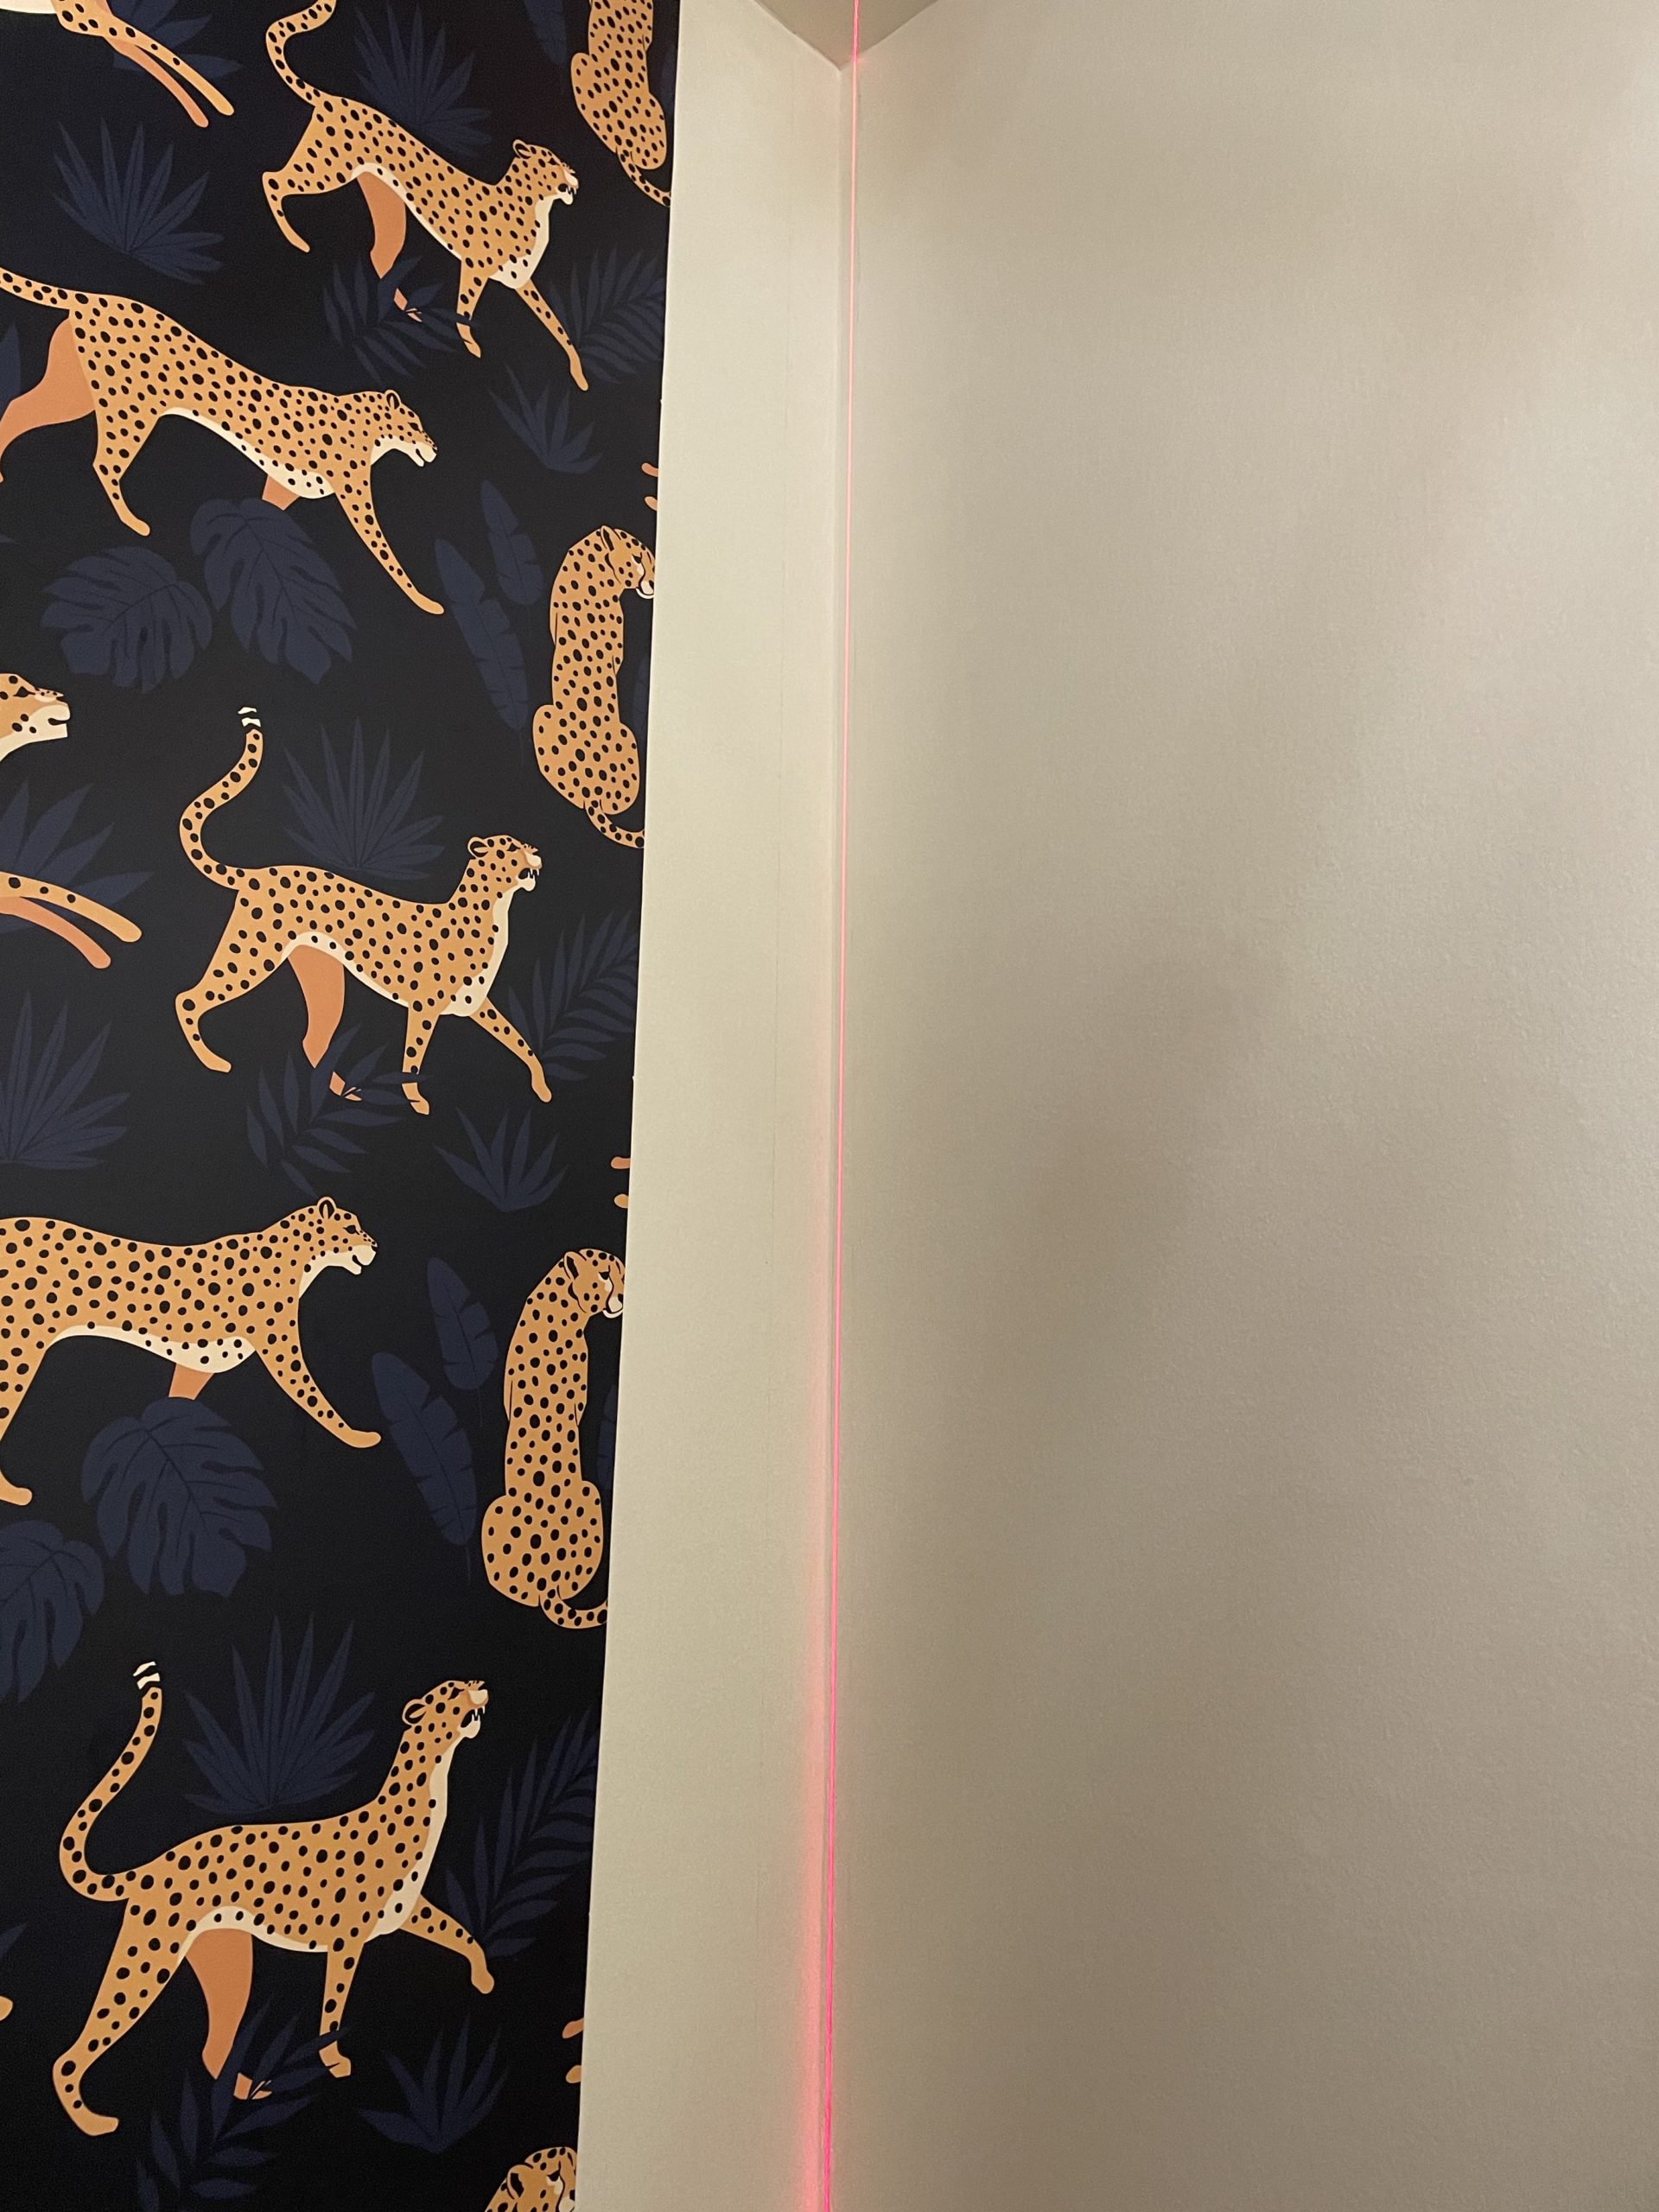 wallpaper pattern doesn't match in a corner - wallpaper installation elgin il